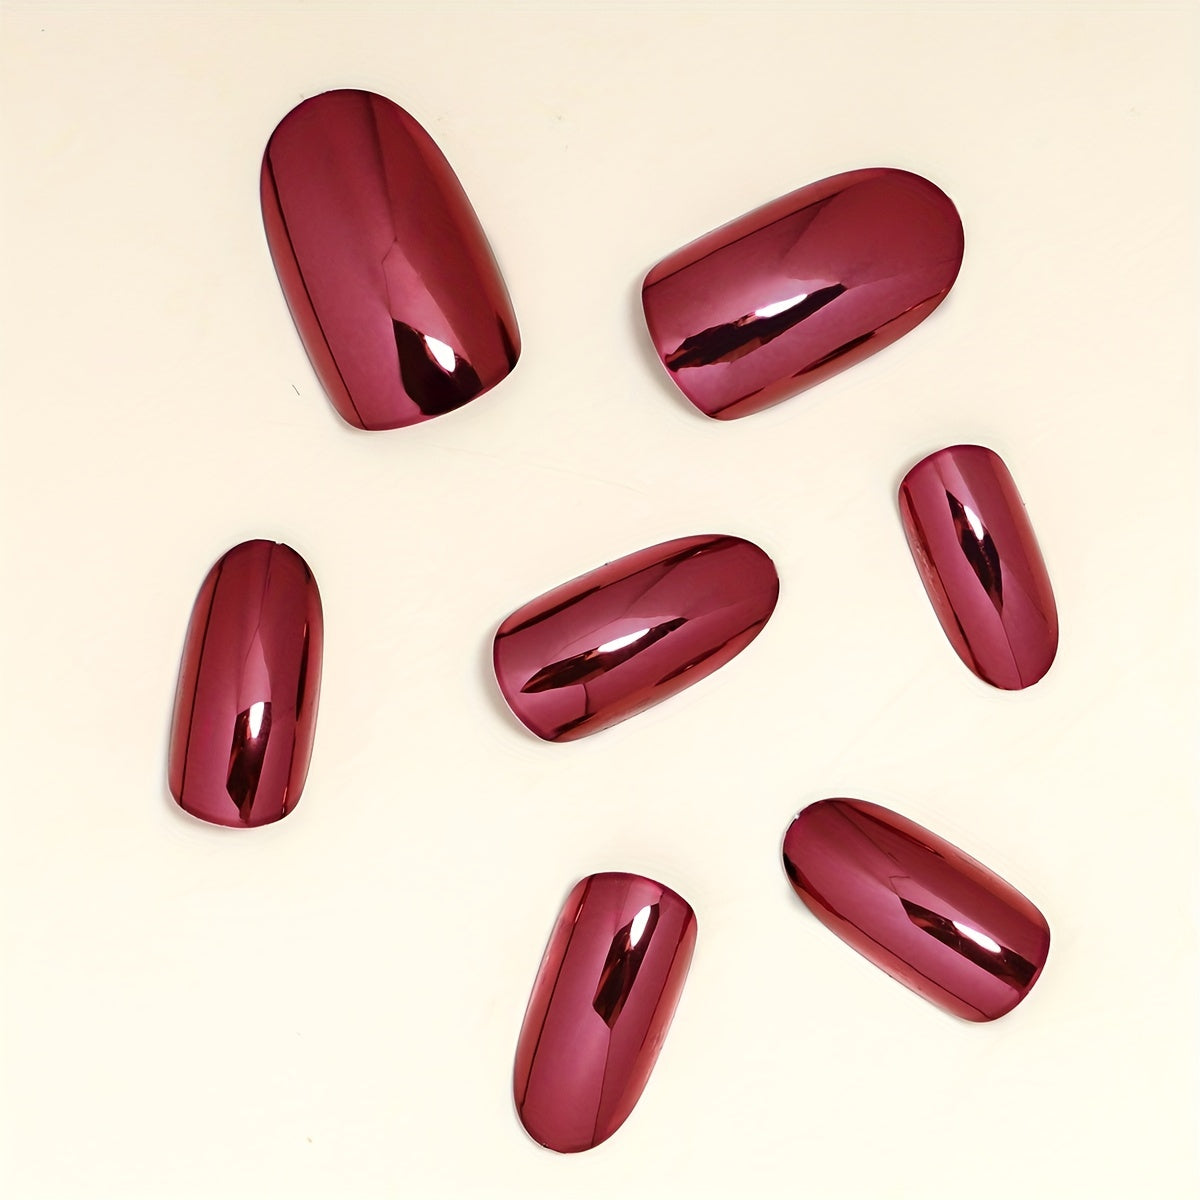 Shiny Metallic Burgundy Press-On Nails - Medium Oval Reflective Mirror Wine Red, 24pcs